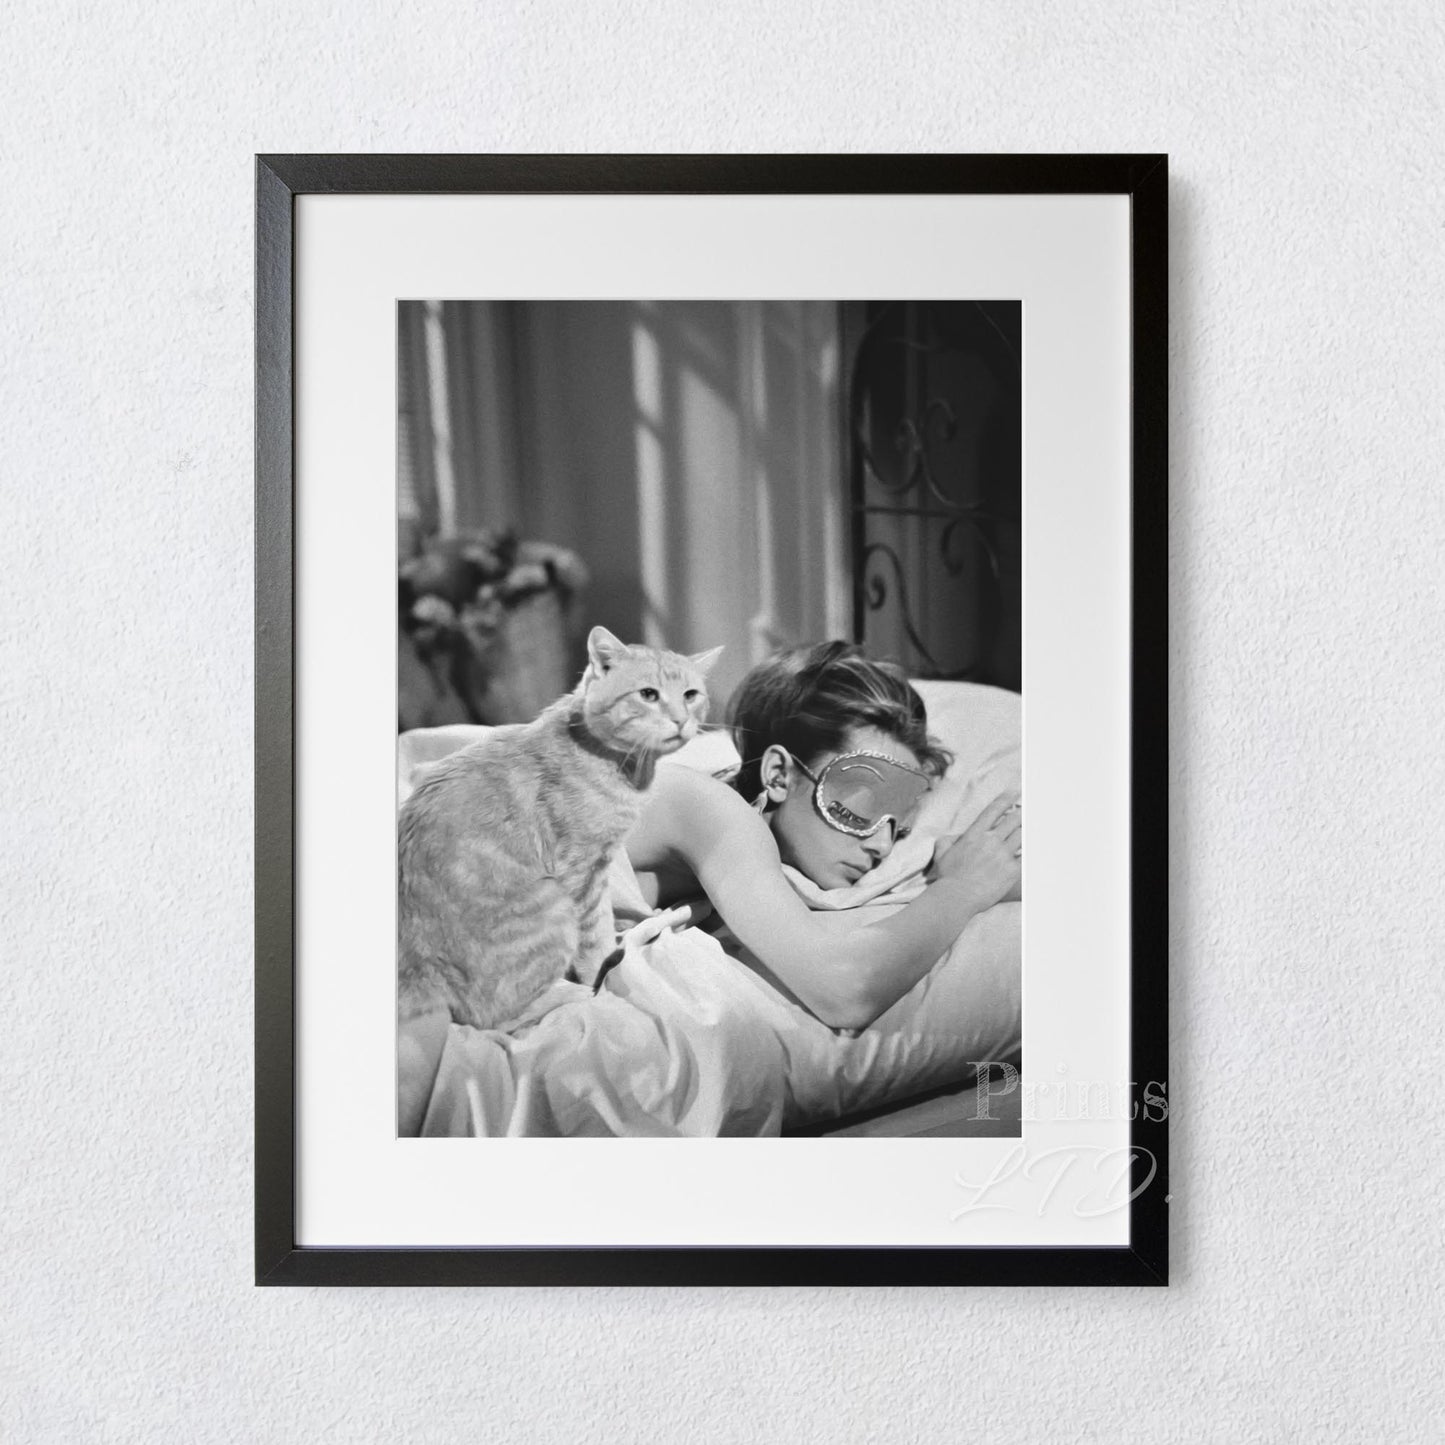 Audrey Hepburn Sleeping With Cat, Breakfast at Tiffany's